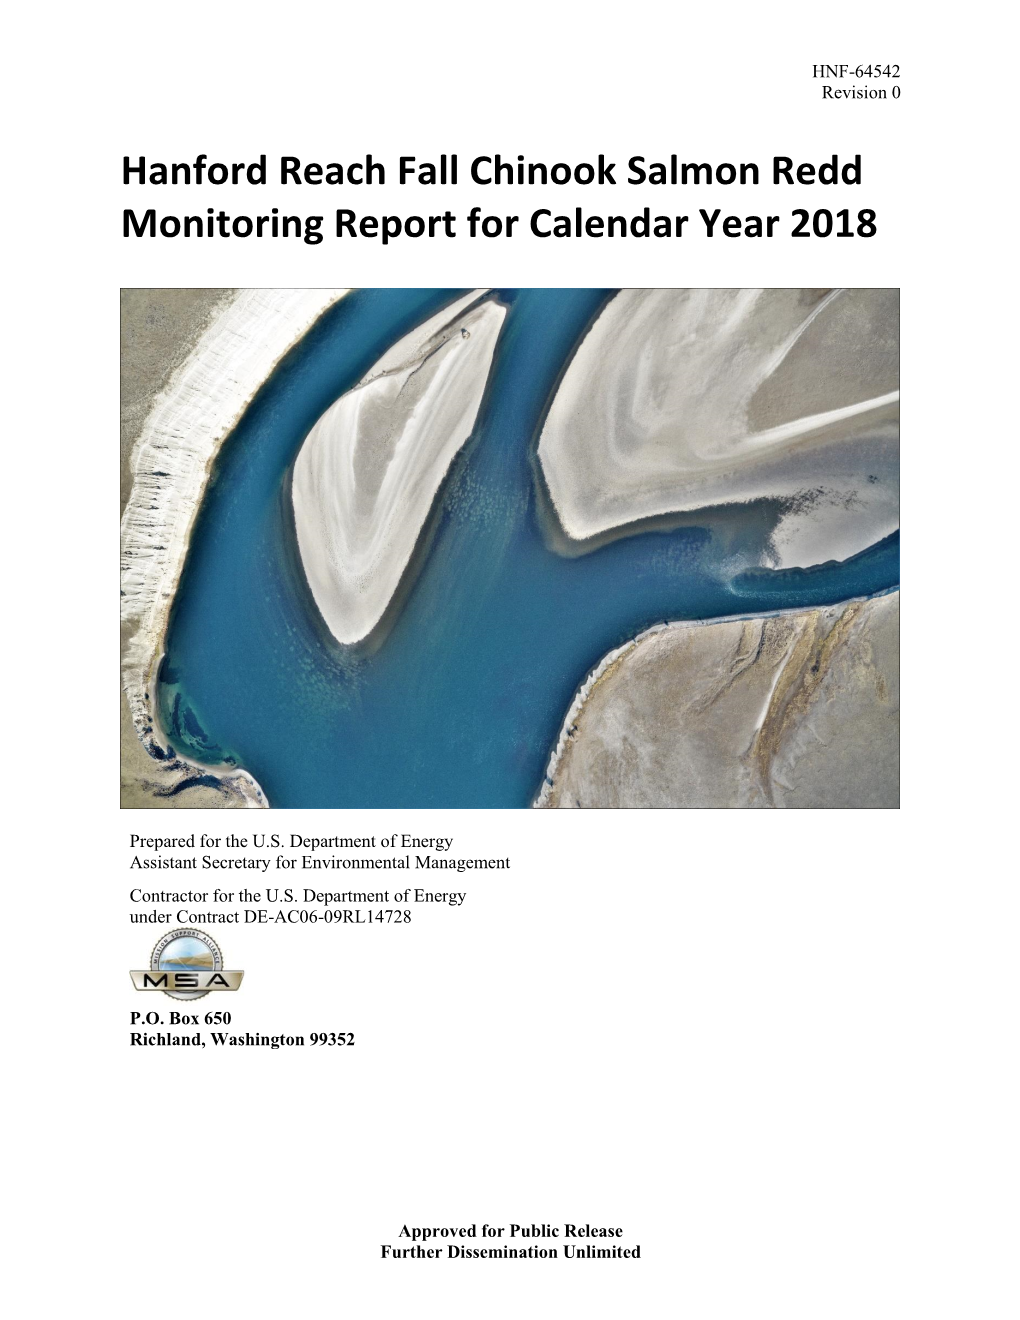 Hanford Reach Fall Chinook Salmon Redd Monitoring Report for Calendar Year 2018